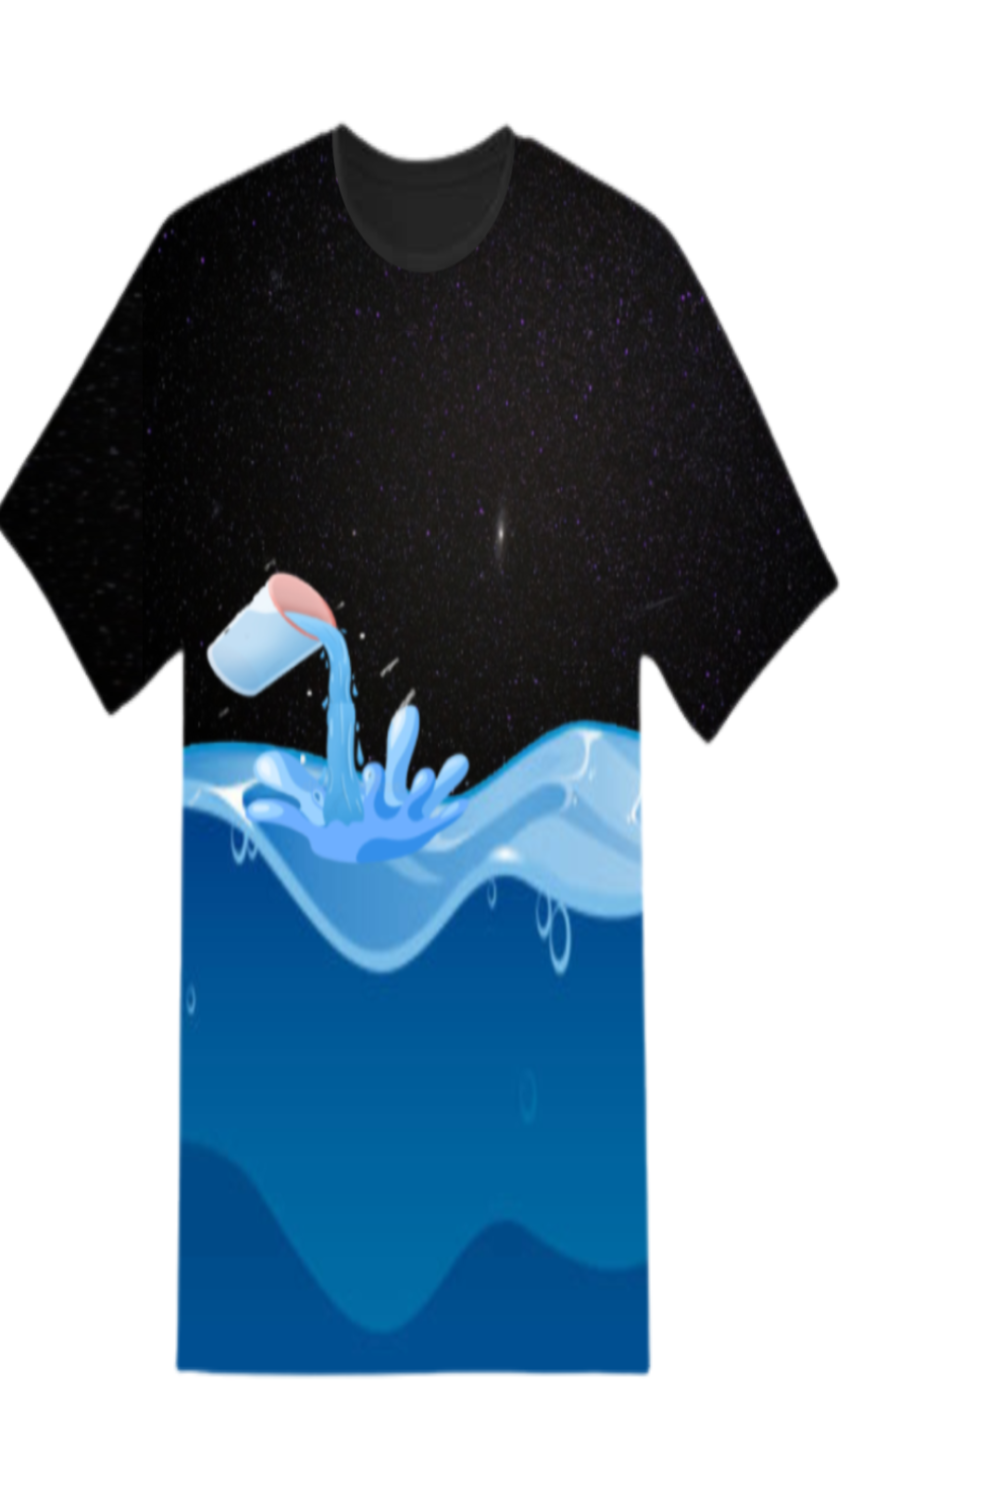 T-shirt Water Design pinterest image.